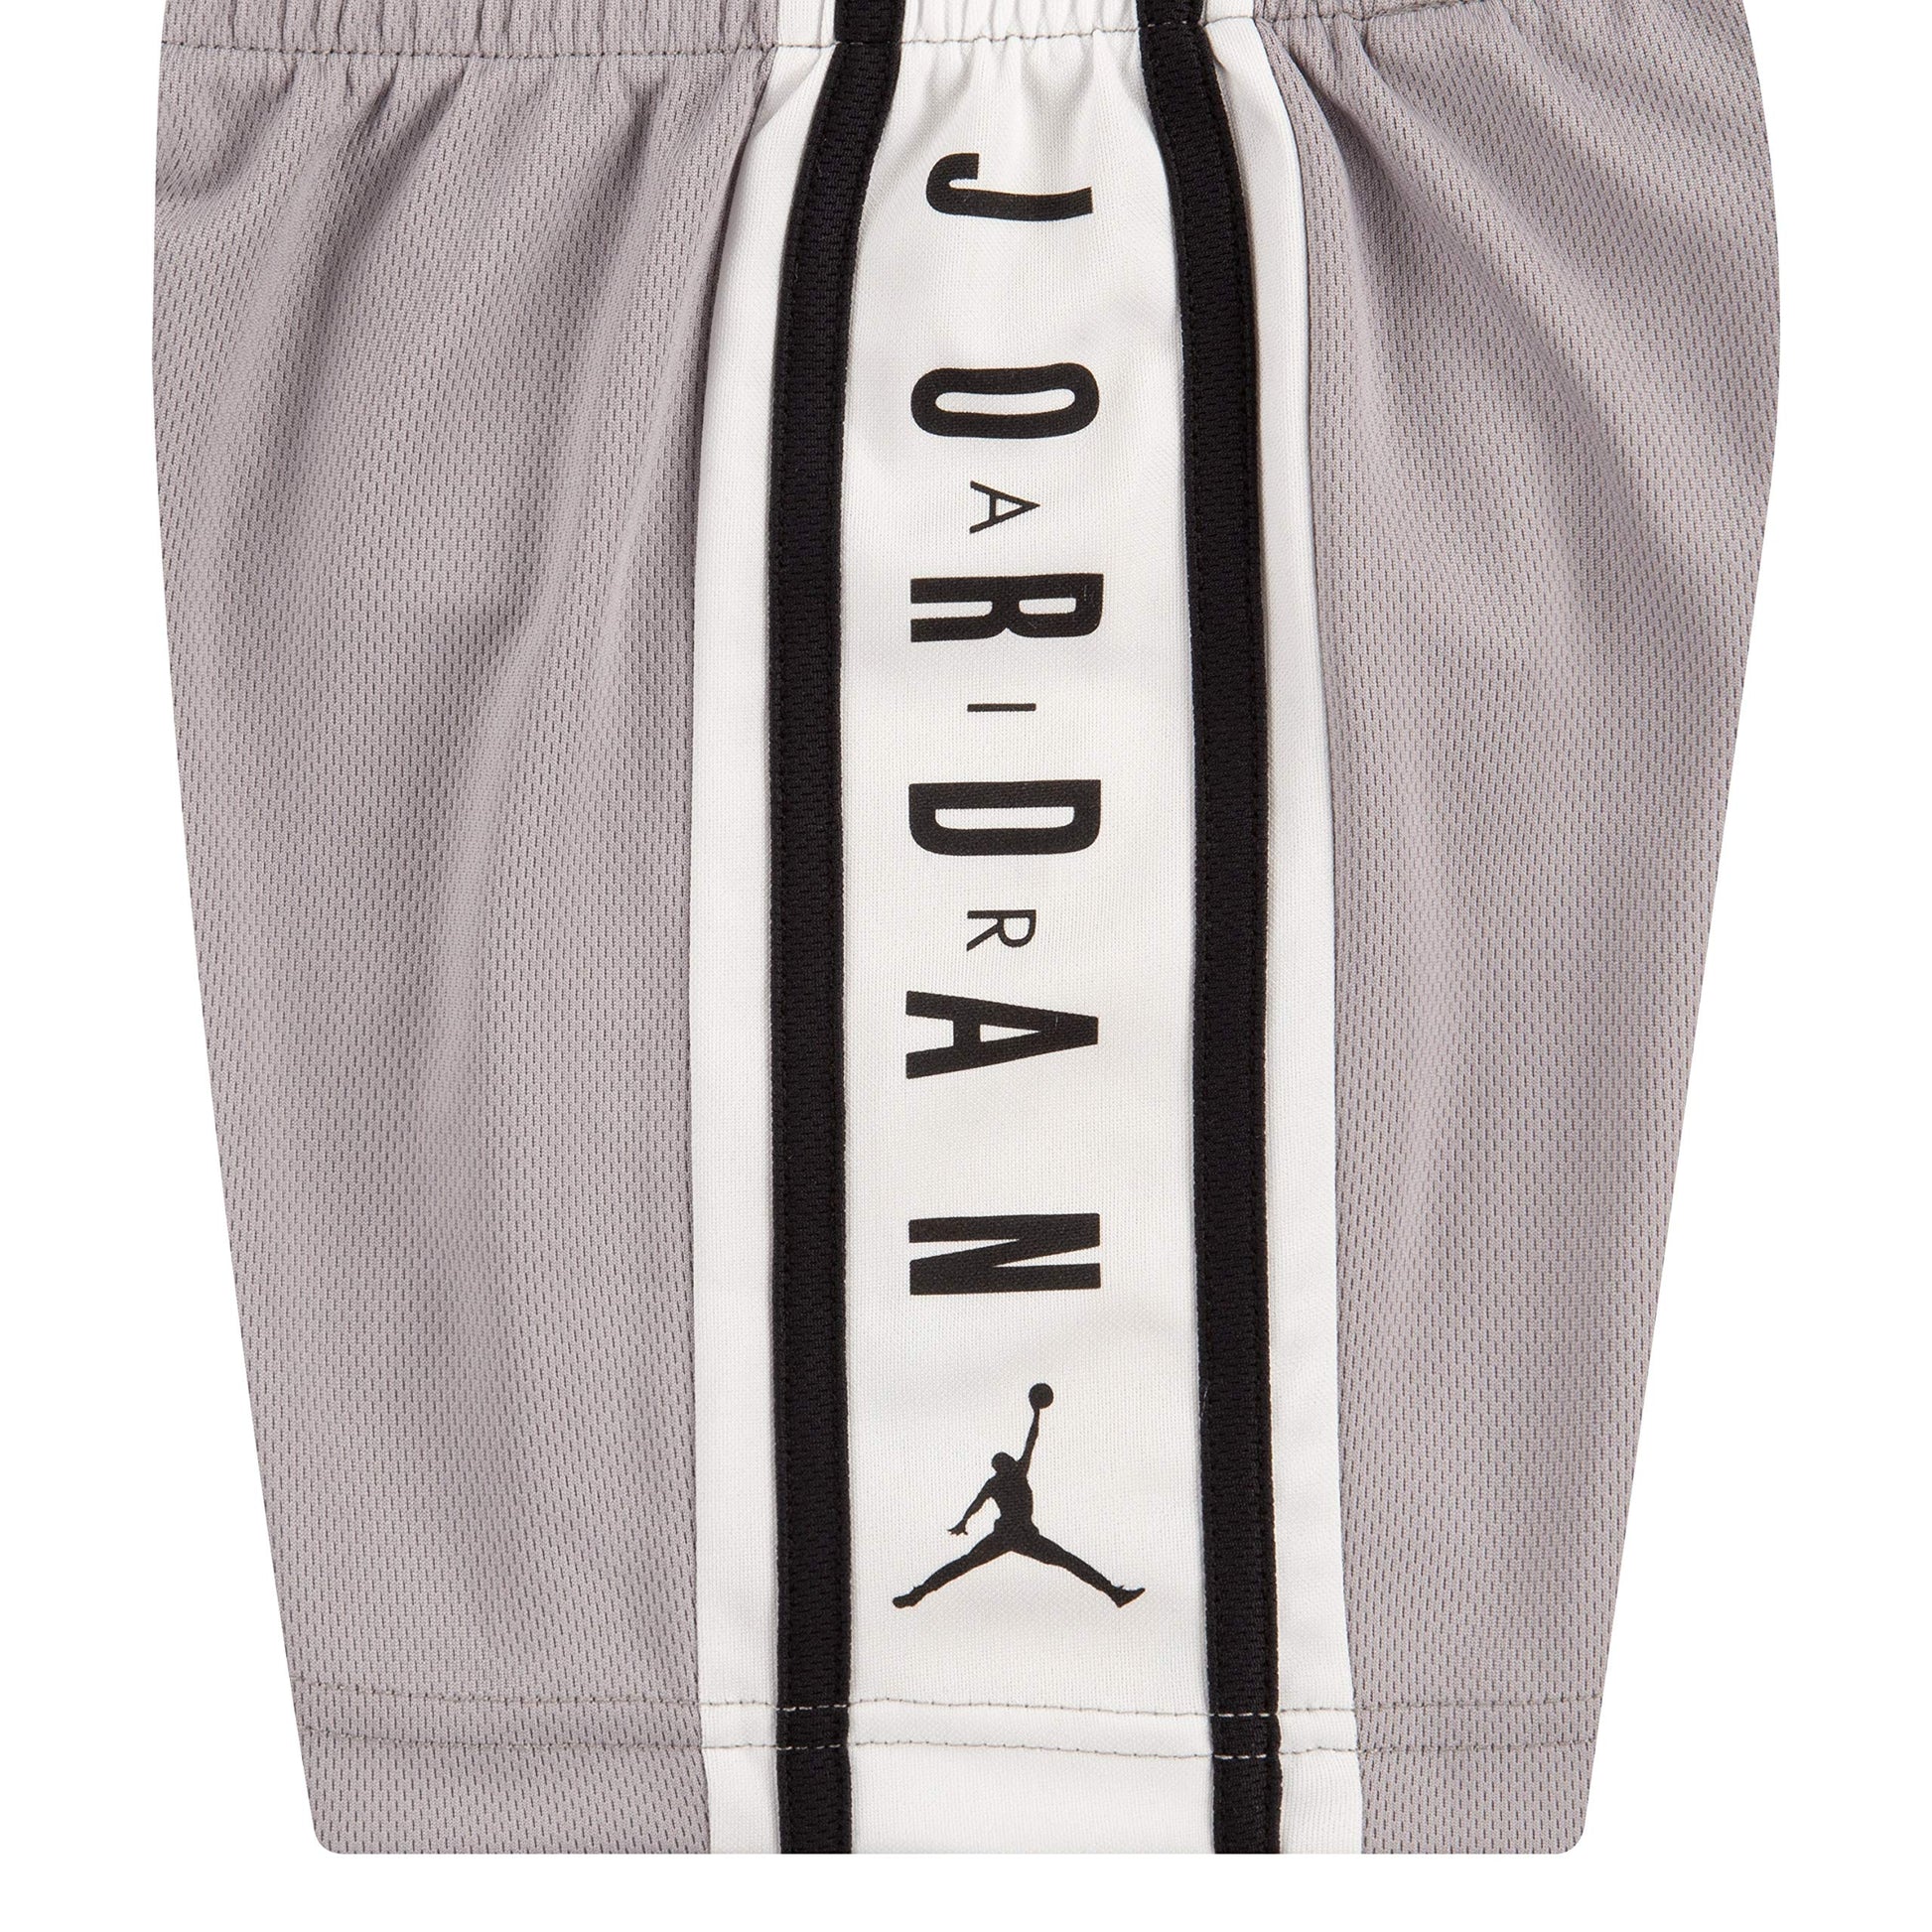 Image 3 of Air Jordan HBR Bball Shorts (Toddler)